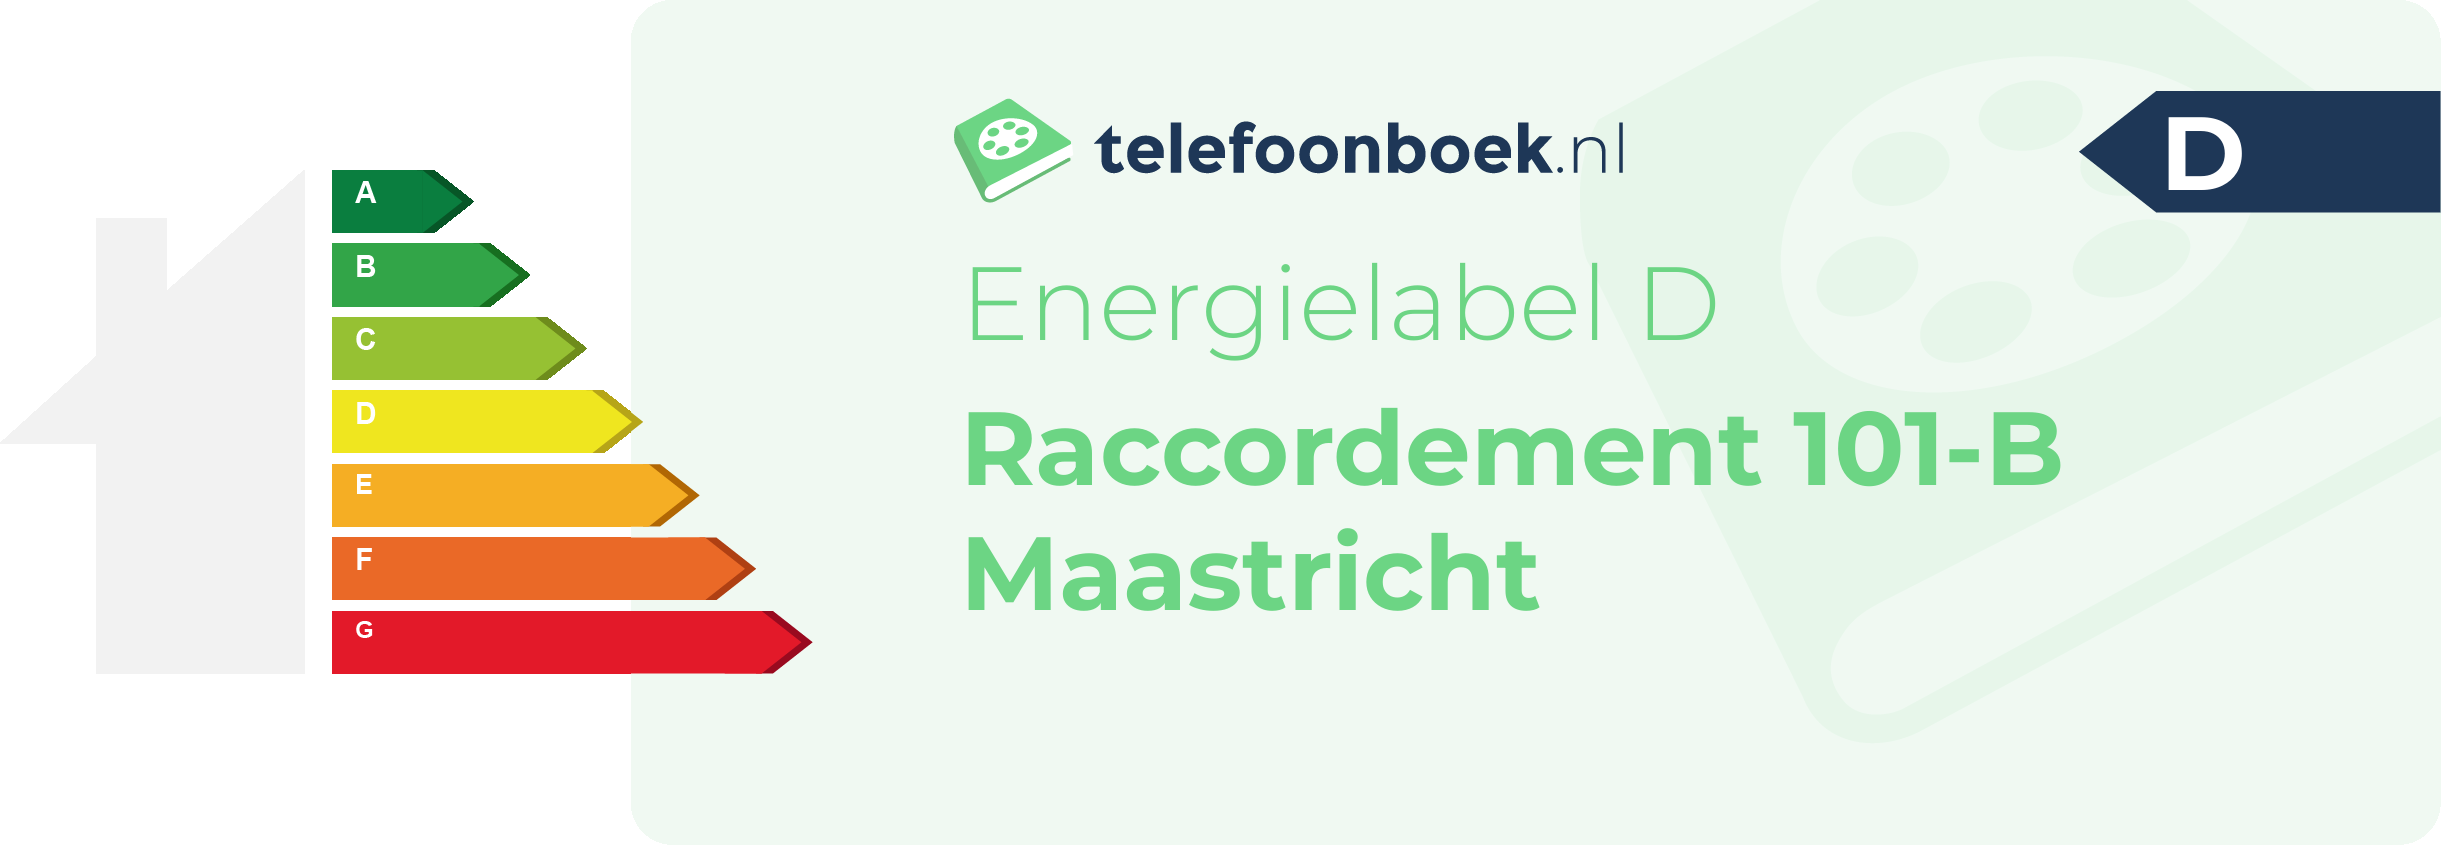 Energielabel Raccordement 101-B Maastricht